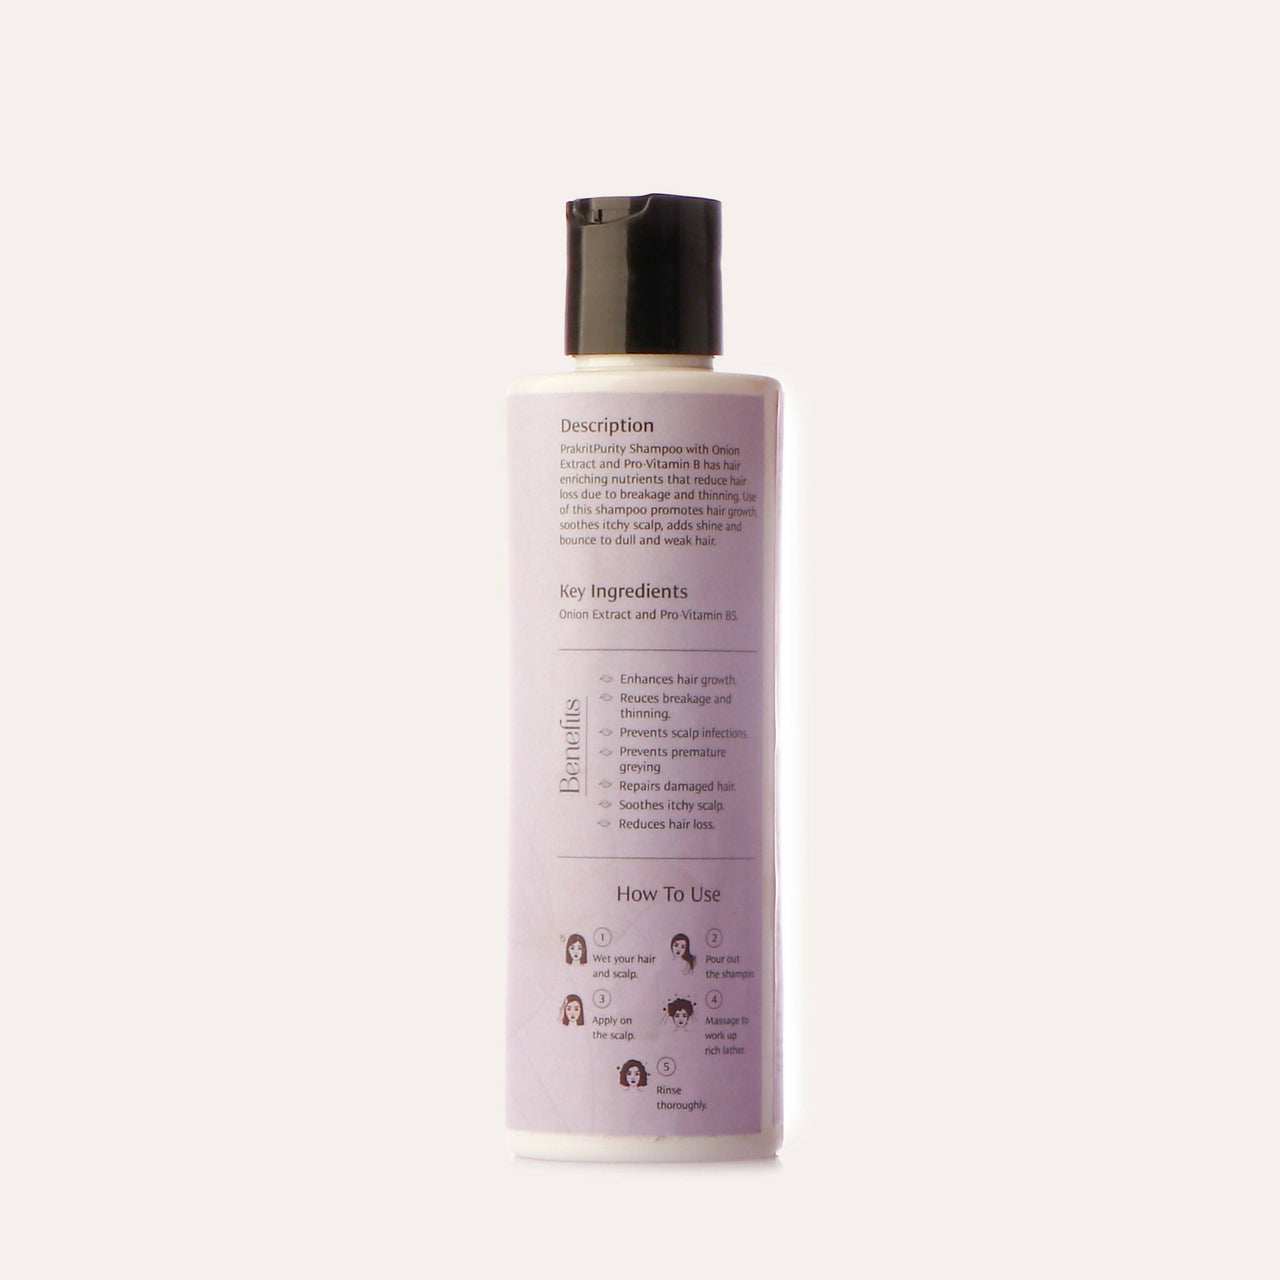 PrakritPurity Onion Shampoo - Distacart